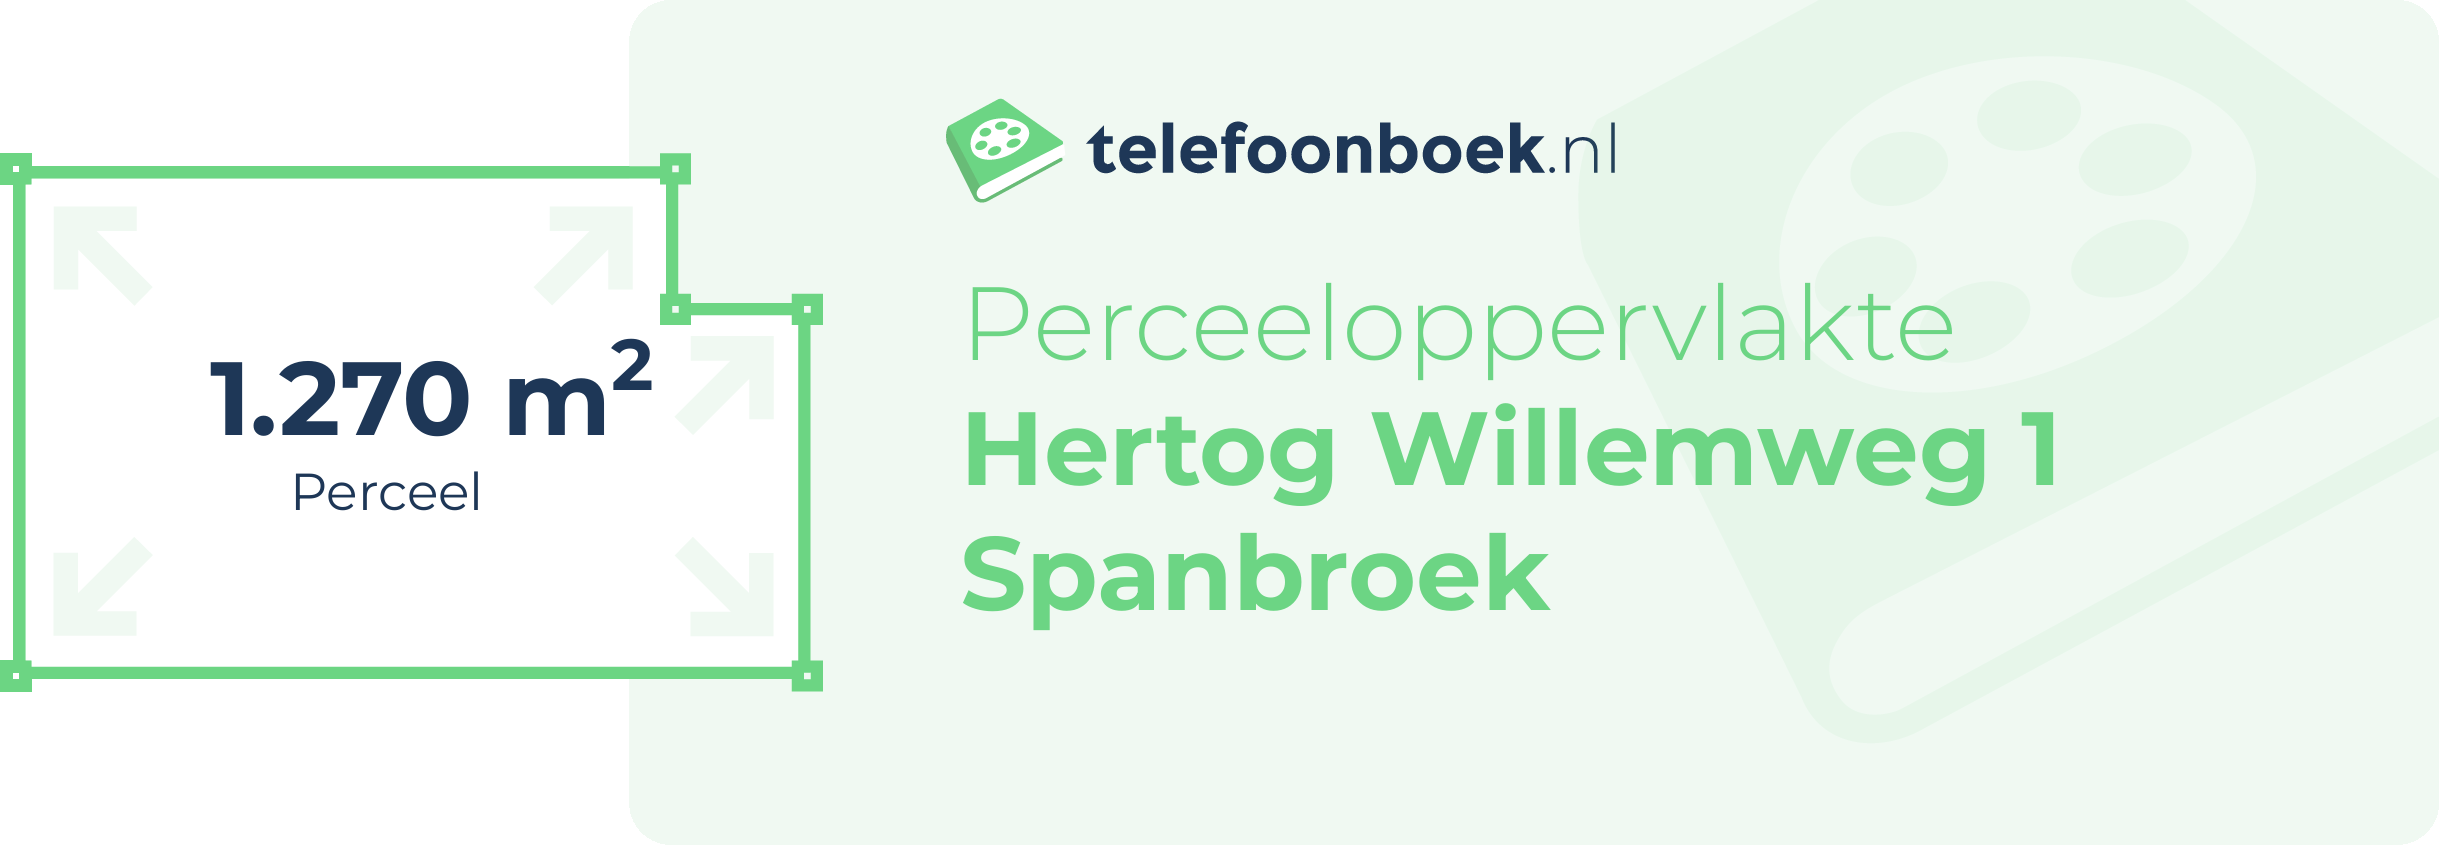 Perceeloppervlakte Hertog Willemweg 1 Spanbroek